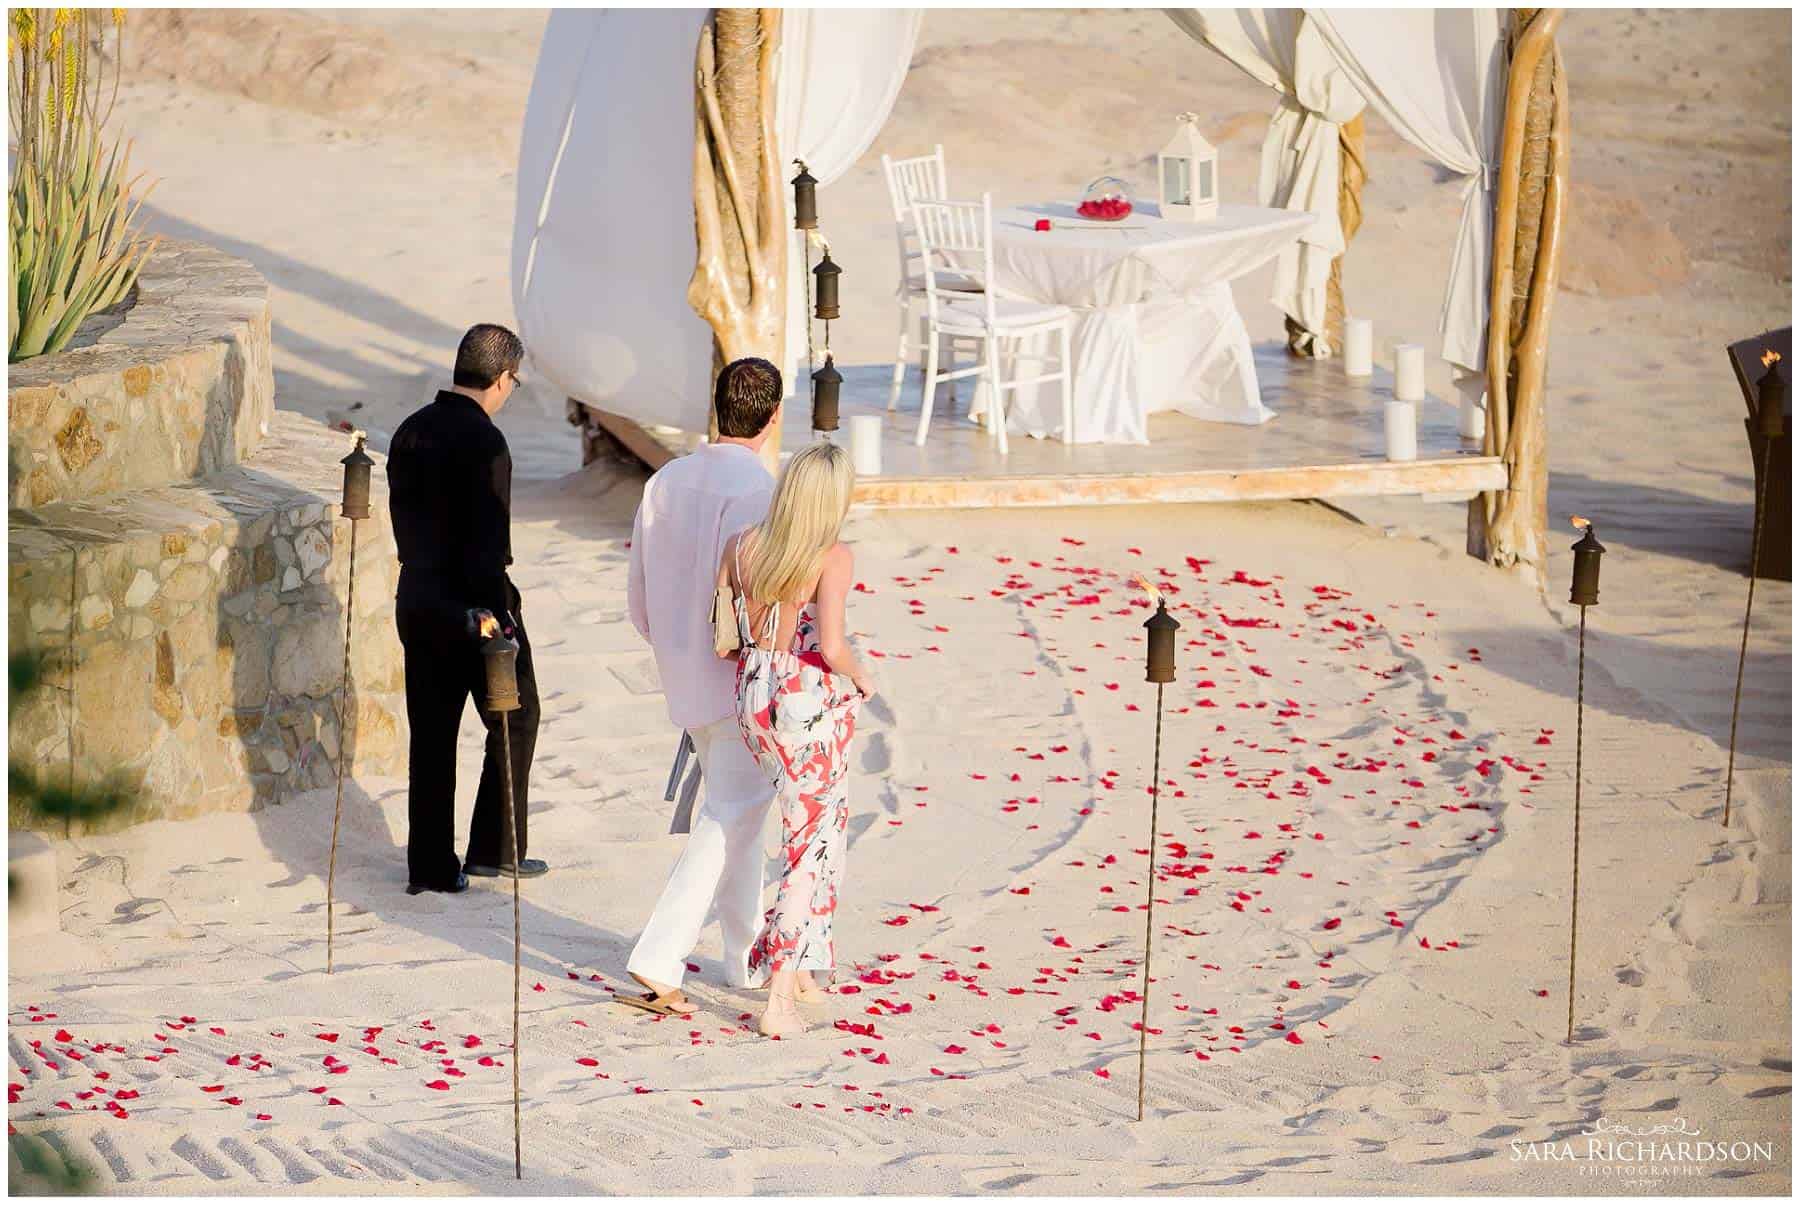 ?pp route=%2Fimage resize&path=%3DcGcq5yMx0CbhN3bw9mcQ1SZzlmcwJXdT1SY65WYyVGczVULyVGawFmcn9GdvhGUtcmbpRGZldVLz9mYhNULz9GTvUDMvQTMwIjf&width=768 - Los Cabos Wedding Photographer - Surprise Proposal